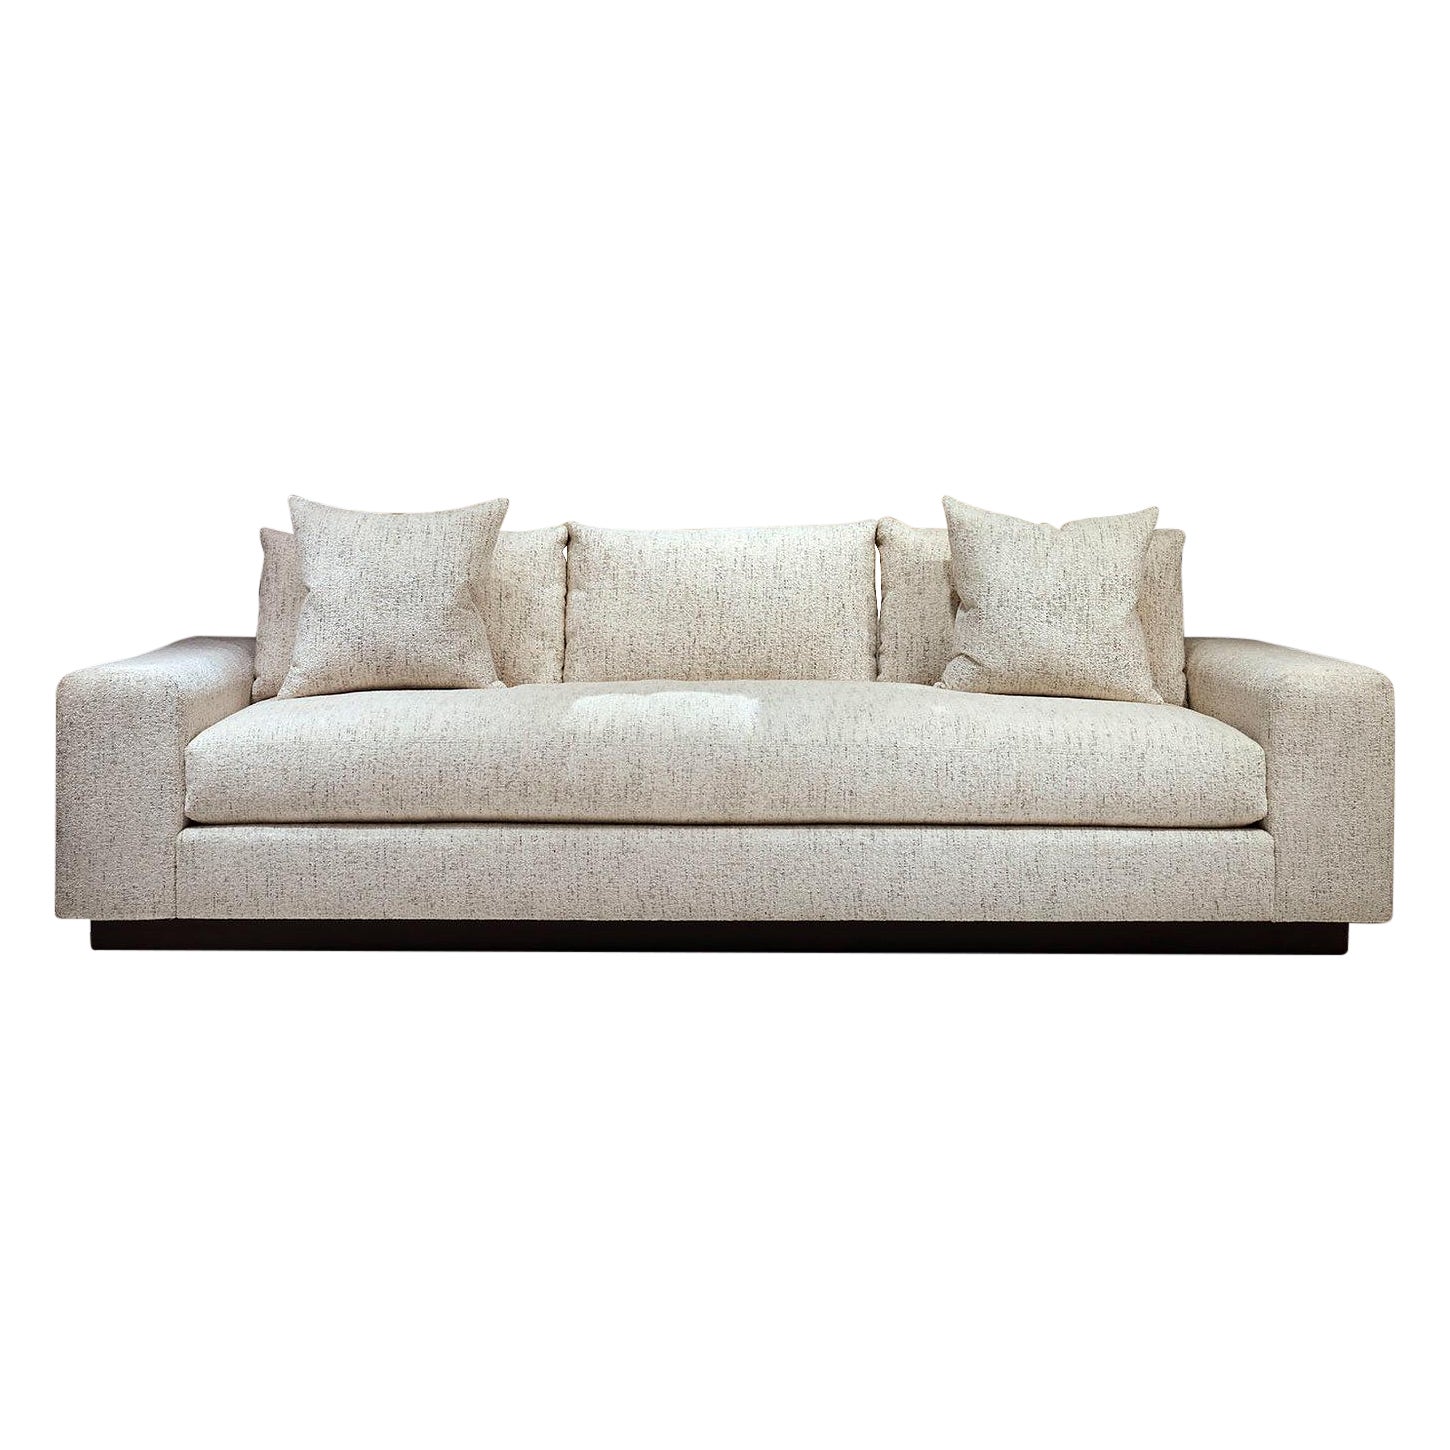 Flint Contemporary Sofa For Sale